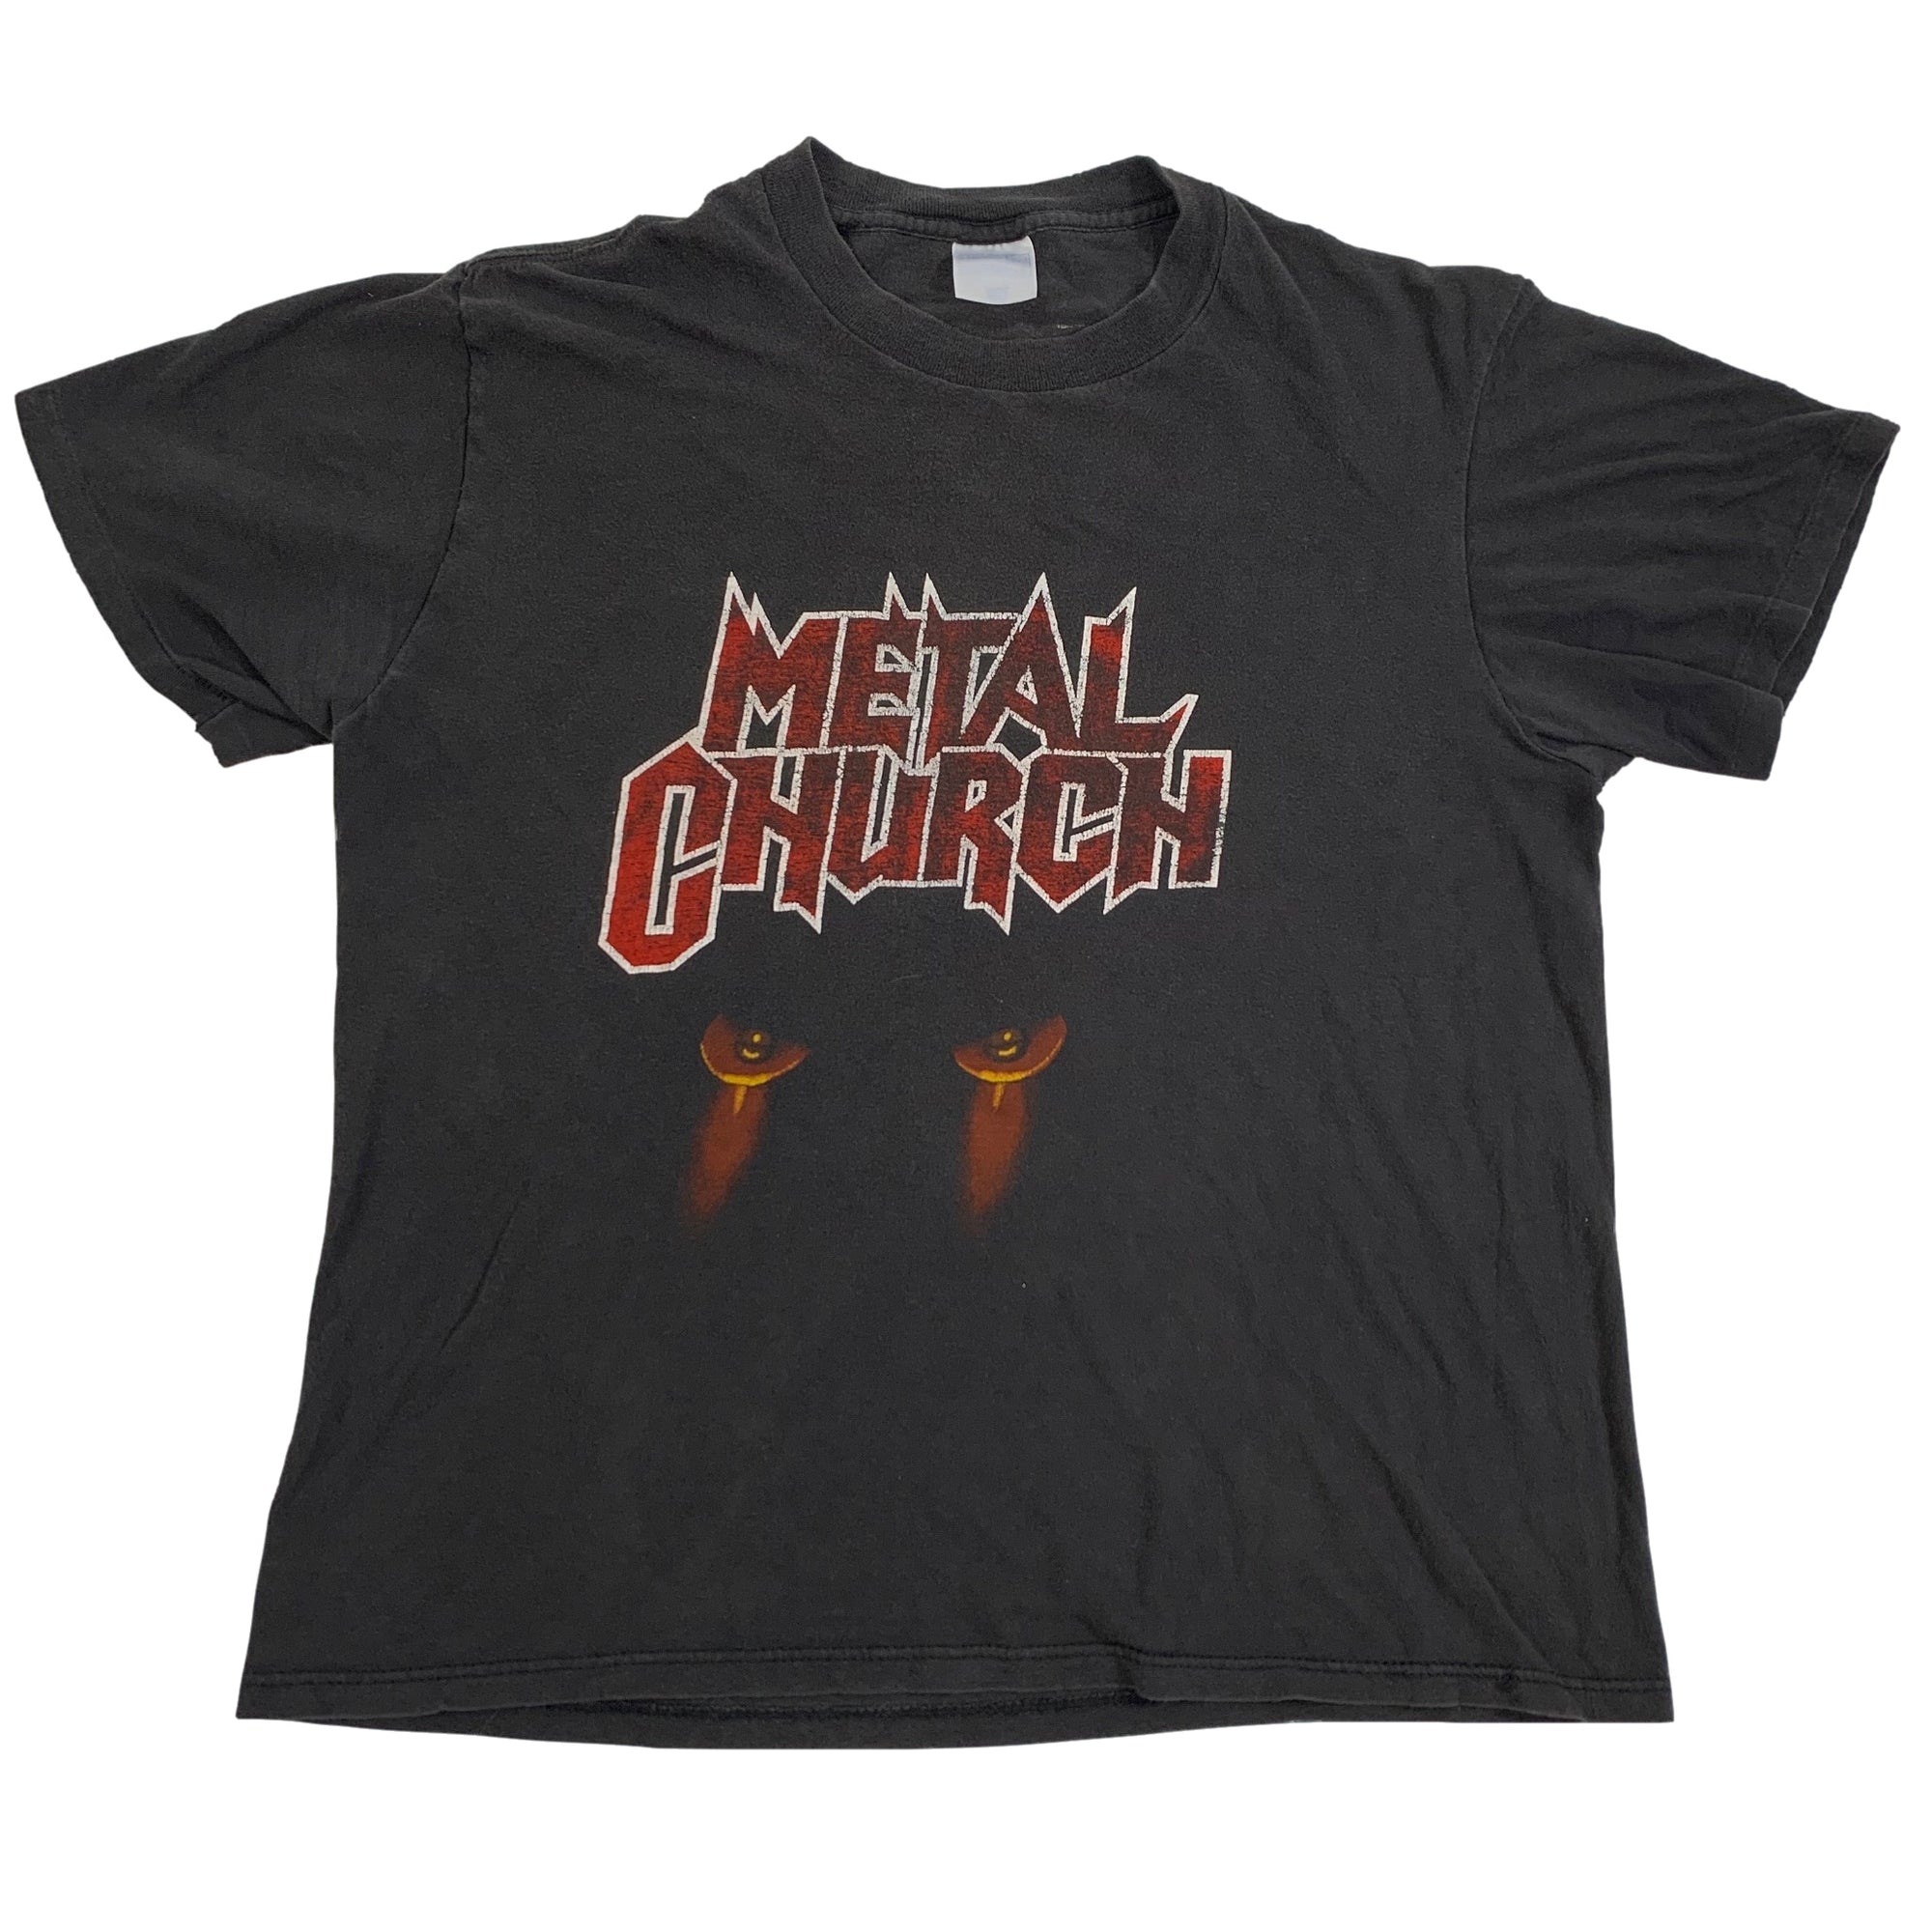 Vintage Metal Church "North America" Tour T-Shirt - jointcustodydc